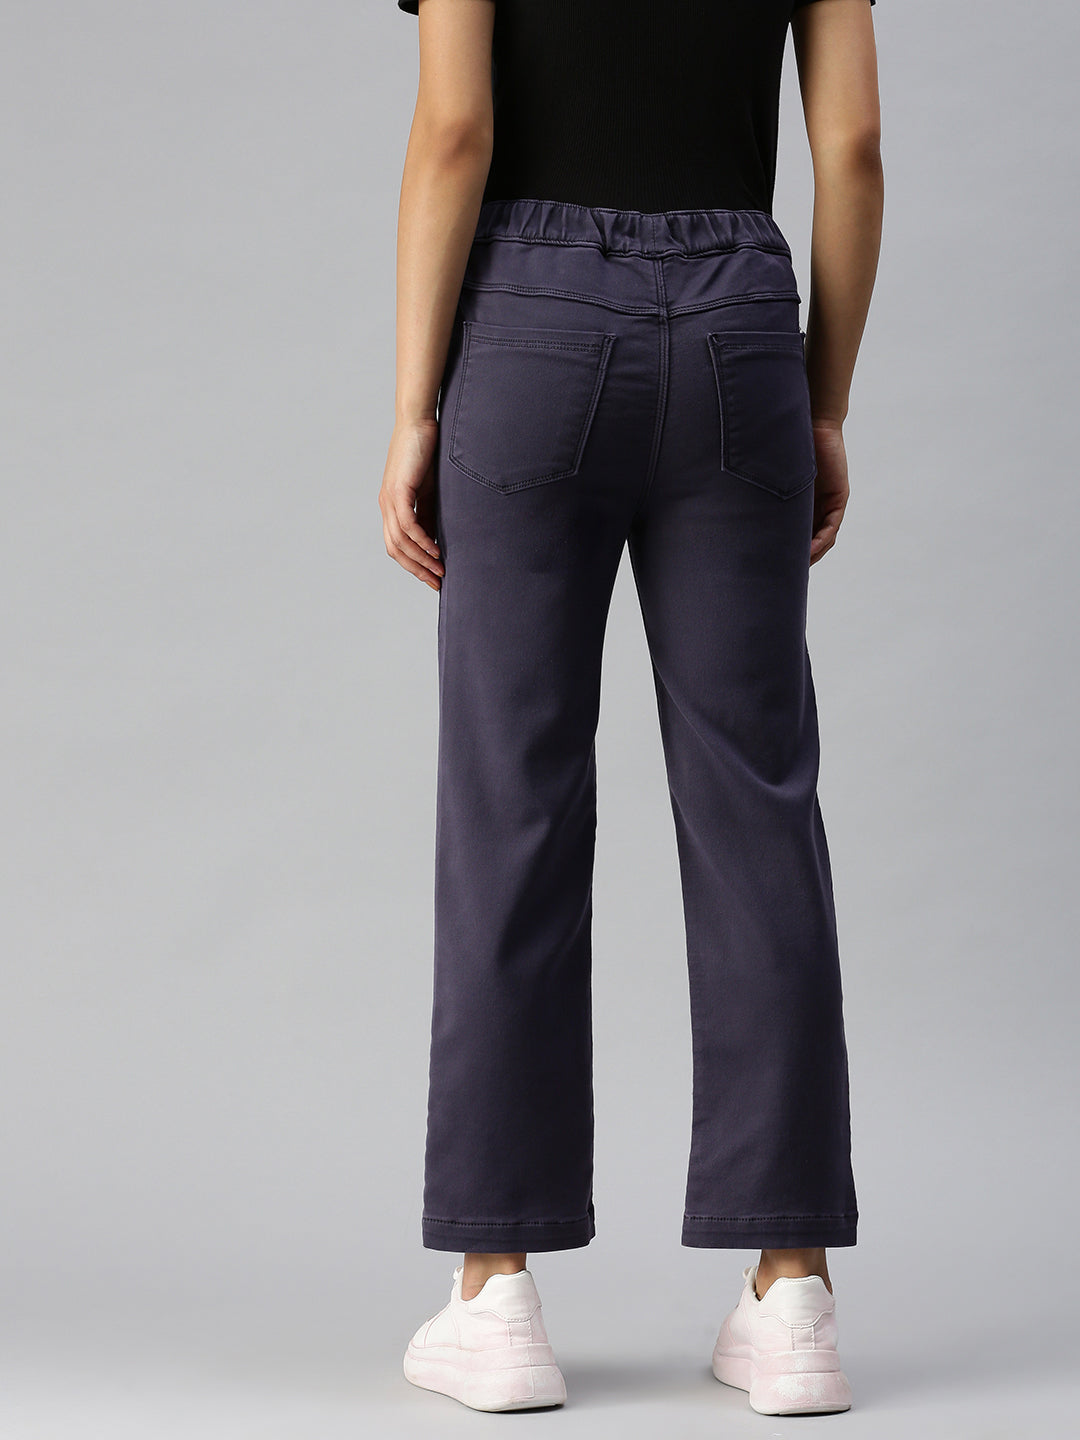 Women's Purple Solid Denim Relaxed Jeans